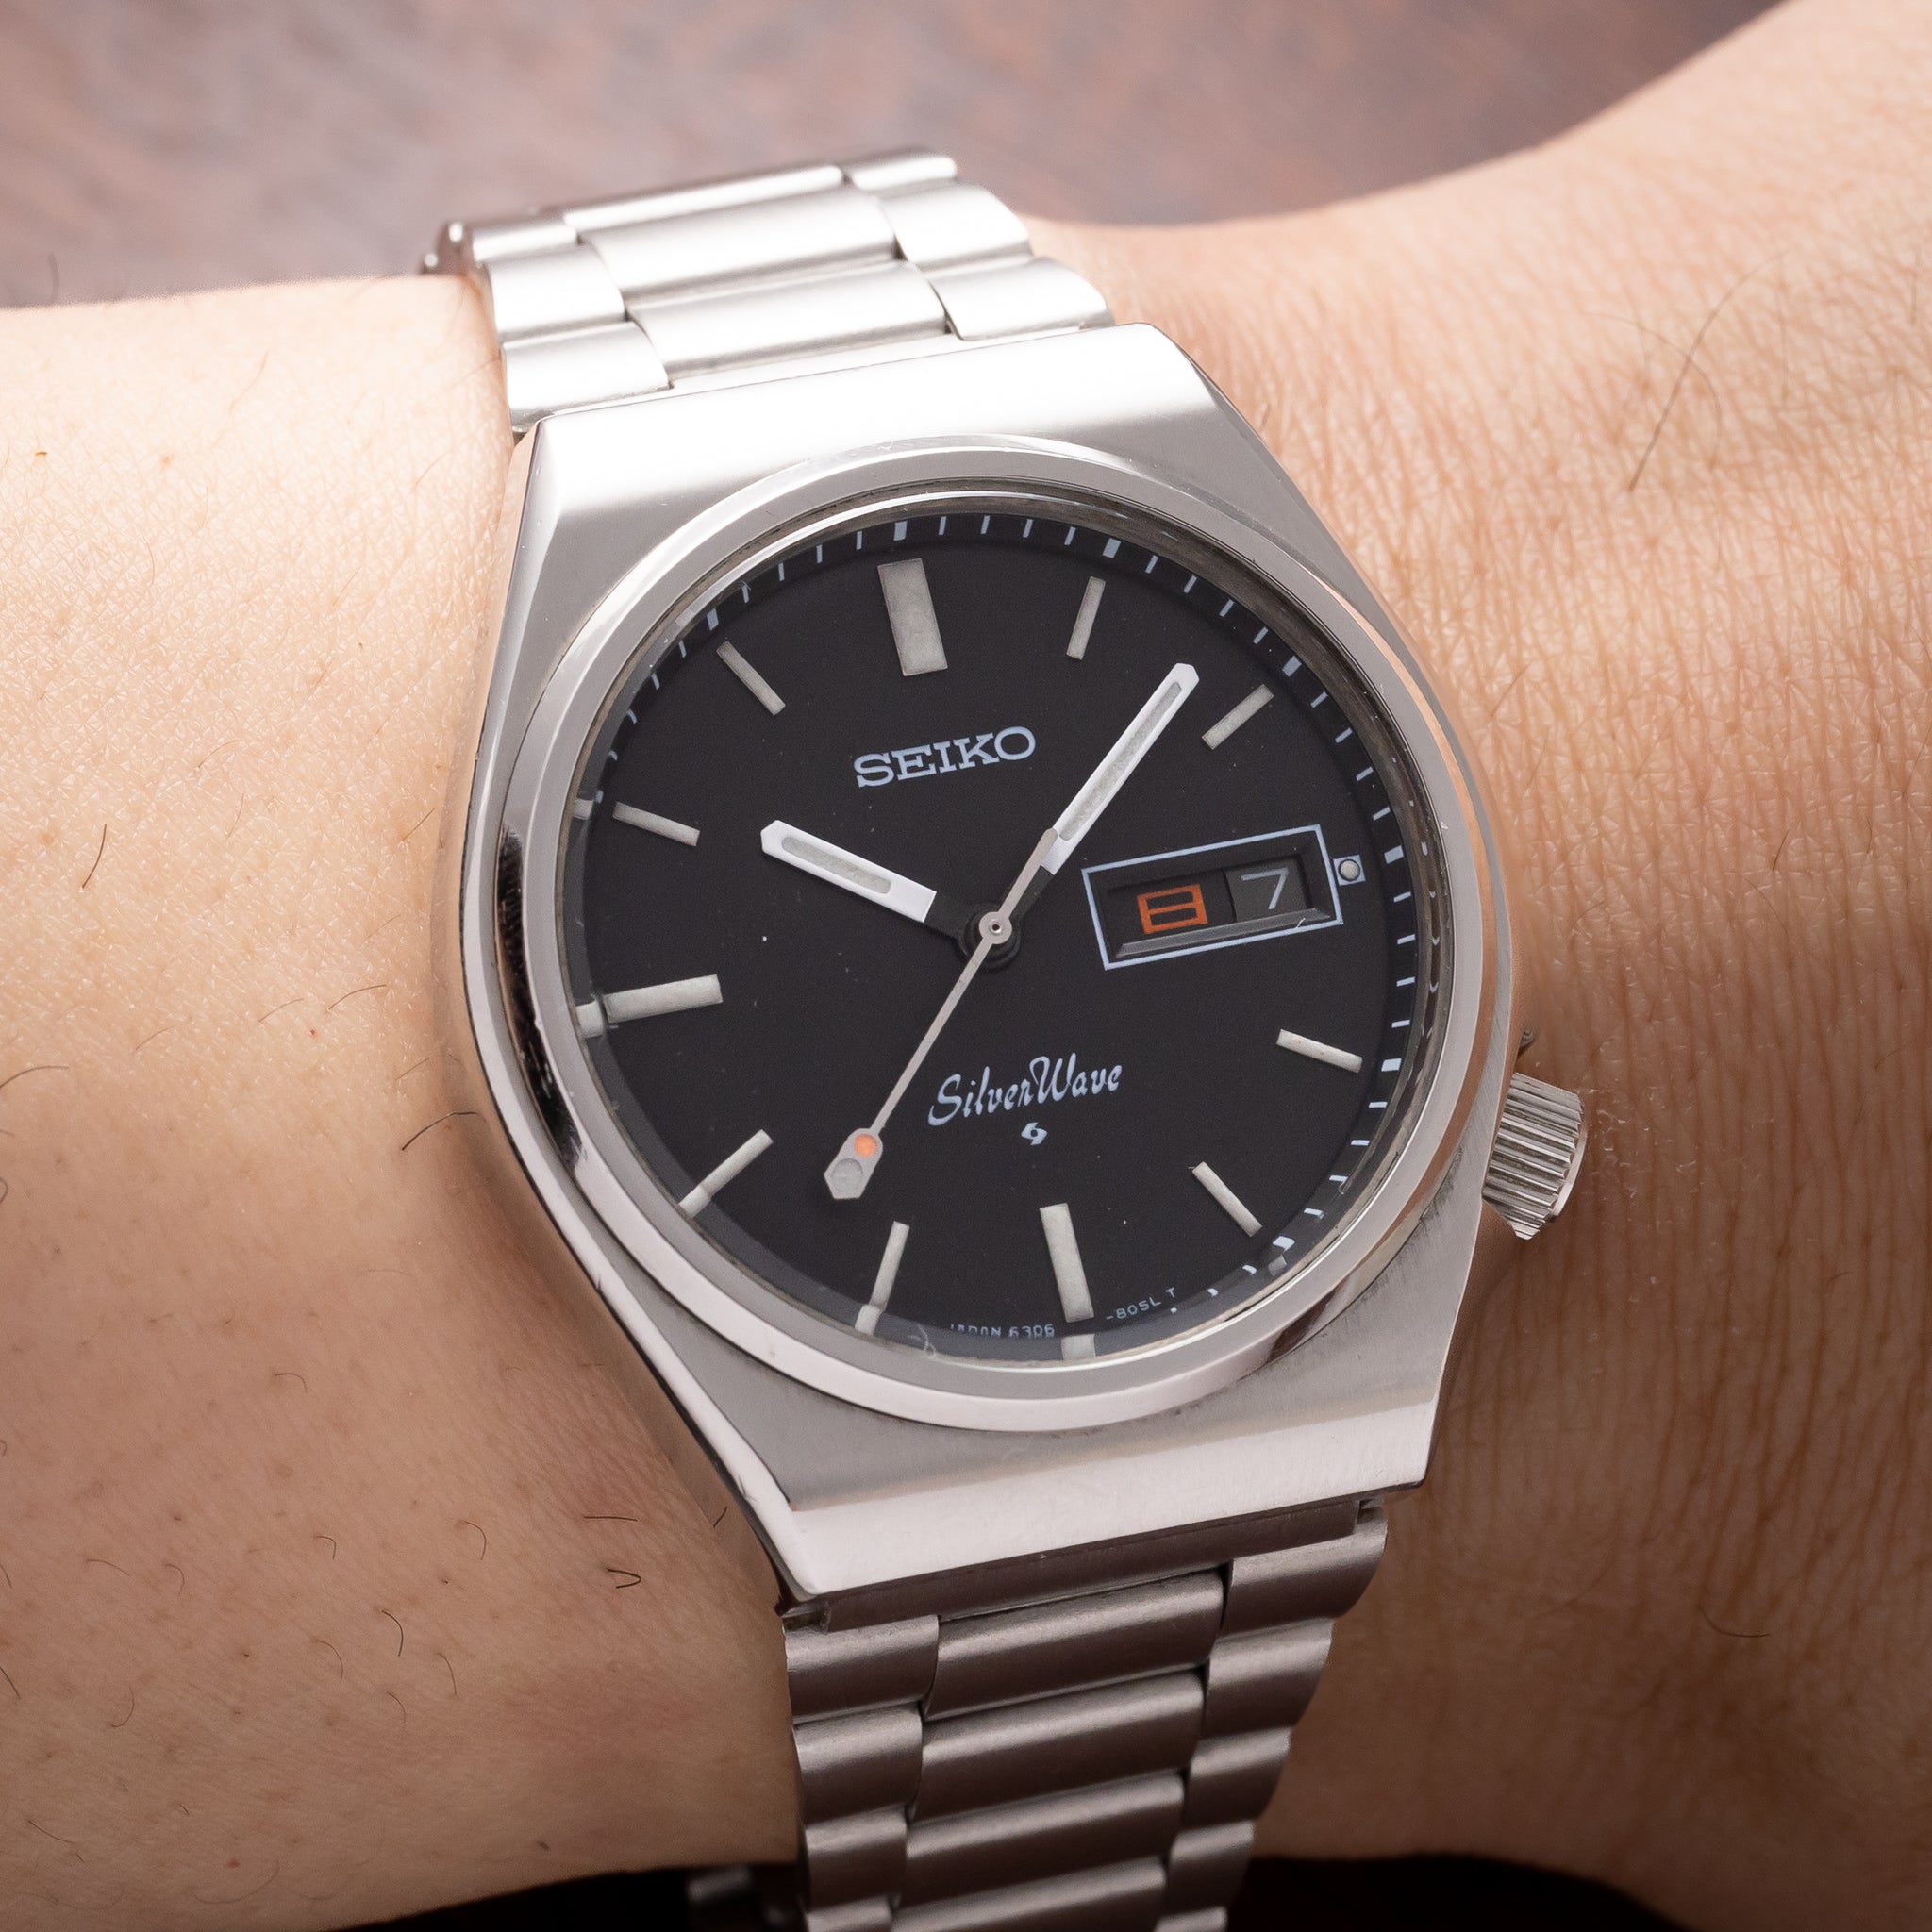 SEIKO セイコー SilverWave シルバーウェーブ 6306-8000 - ブランド腕時計